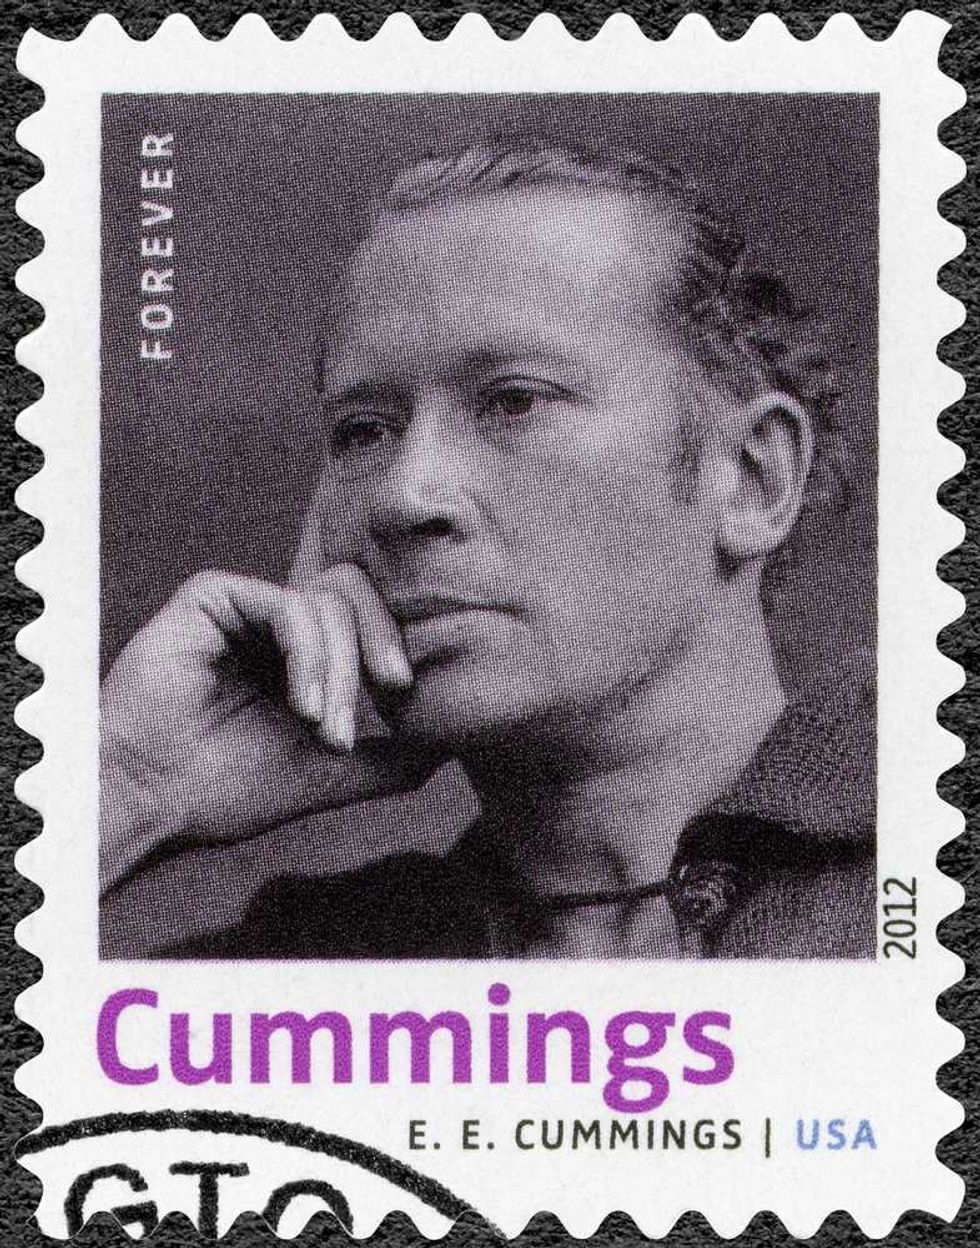 Stamp of Edward Estlin Cummings